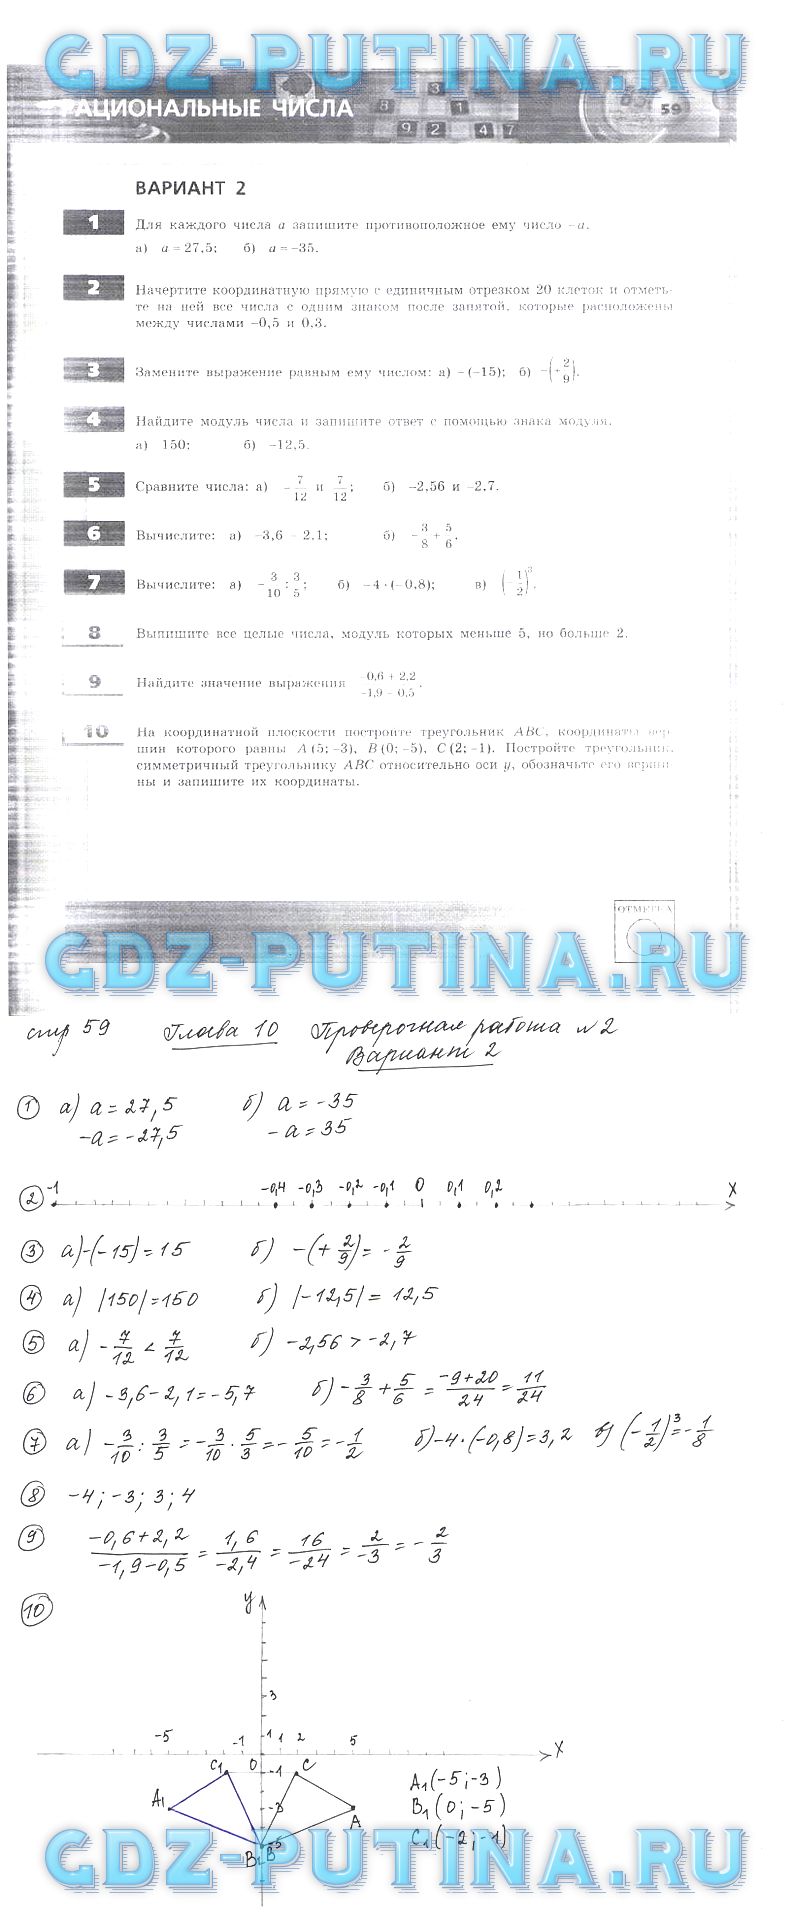 гдз 6 класс тетрадь-экзаменатор страница 59 математика Кузнецова